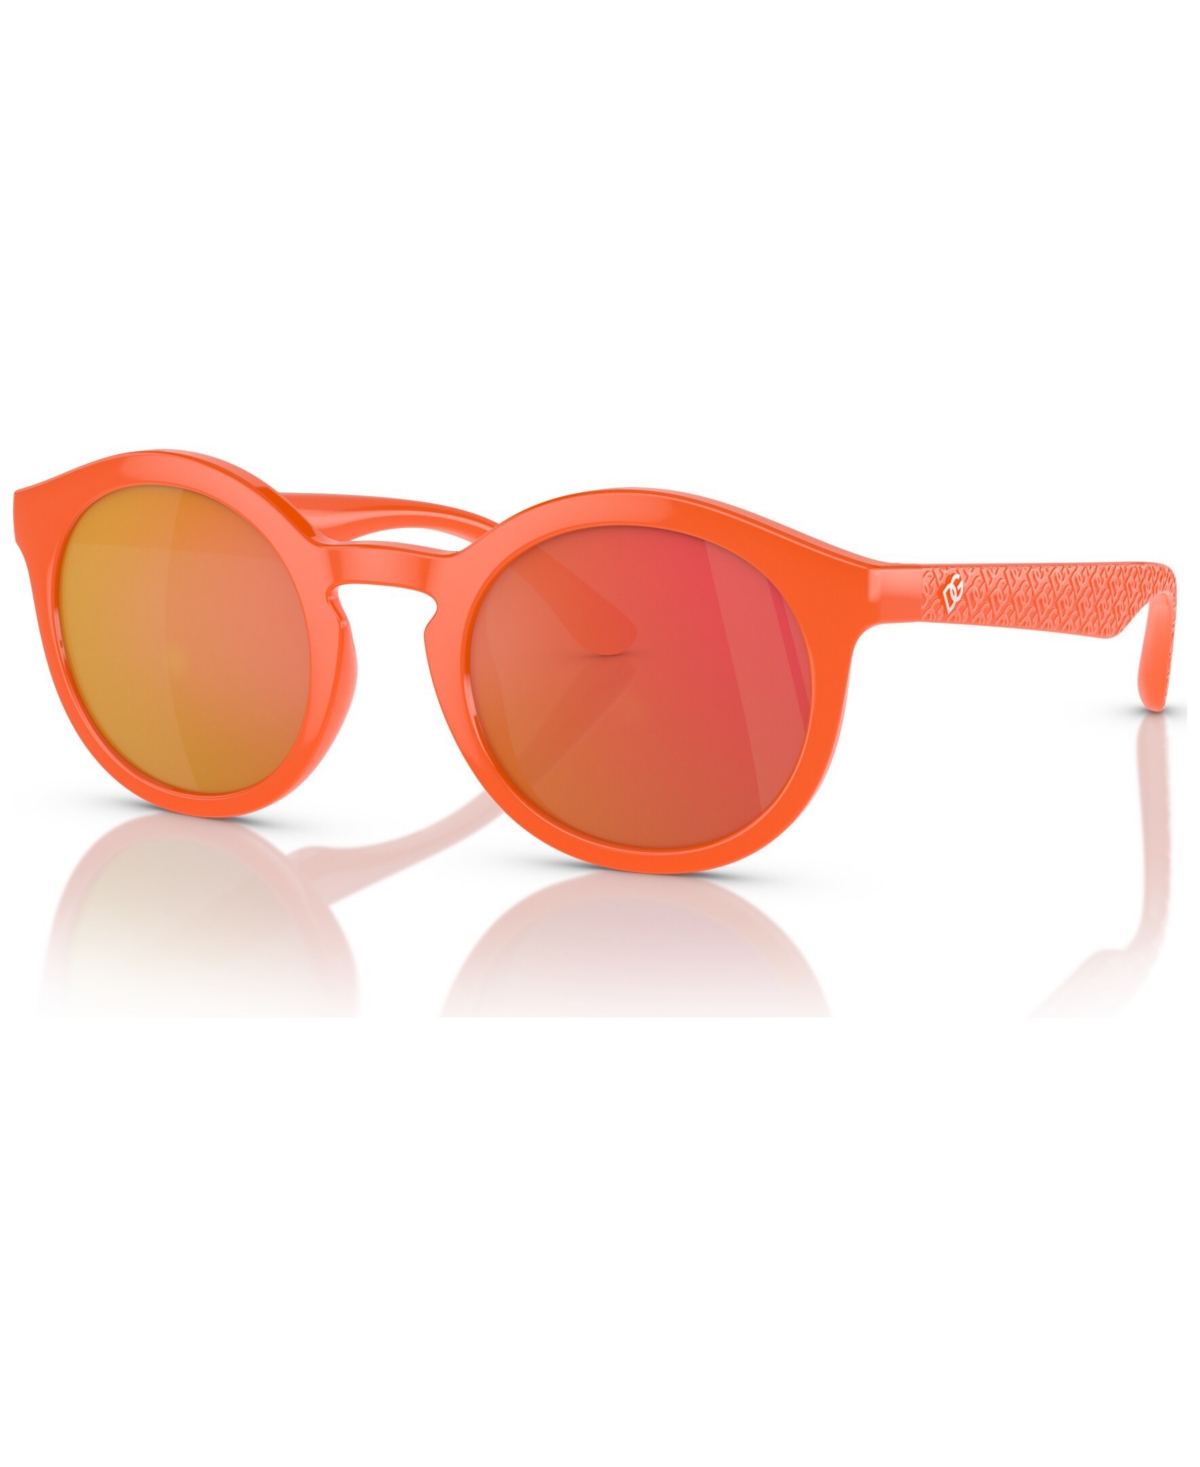 Dolce & Gabbana Kids Sunglasses, 0dx6002 (ages 7-10) In Orange